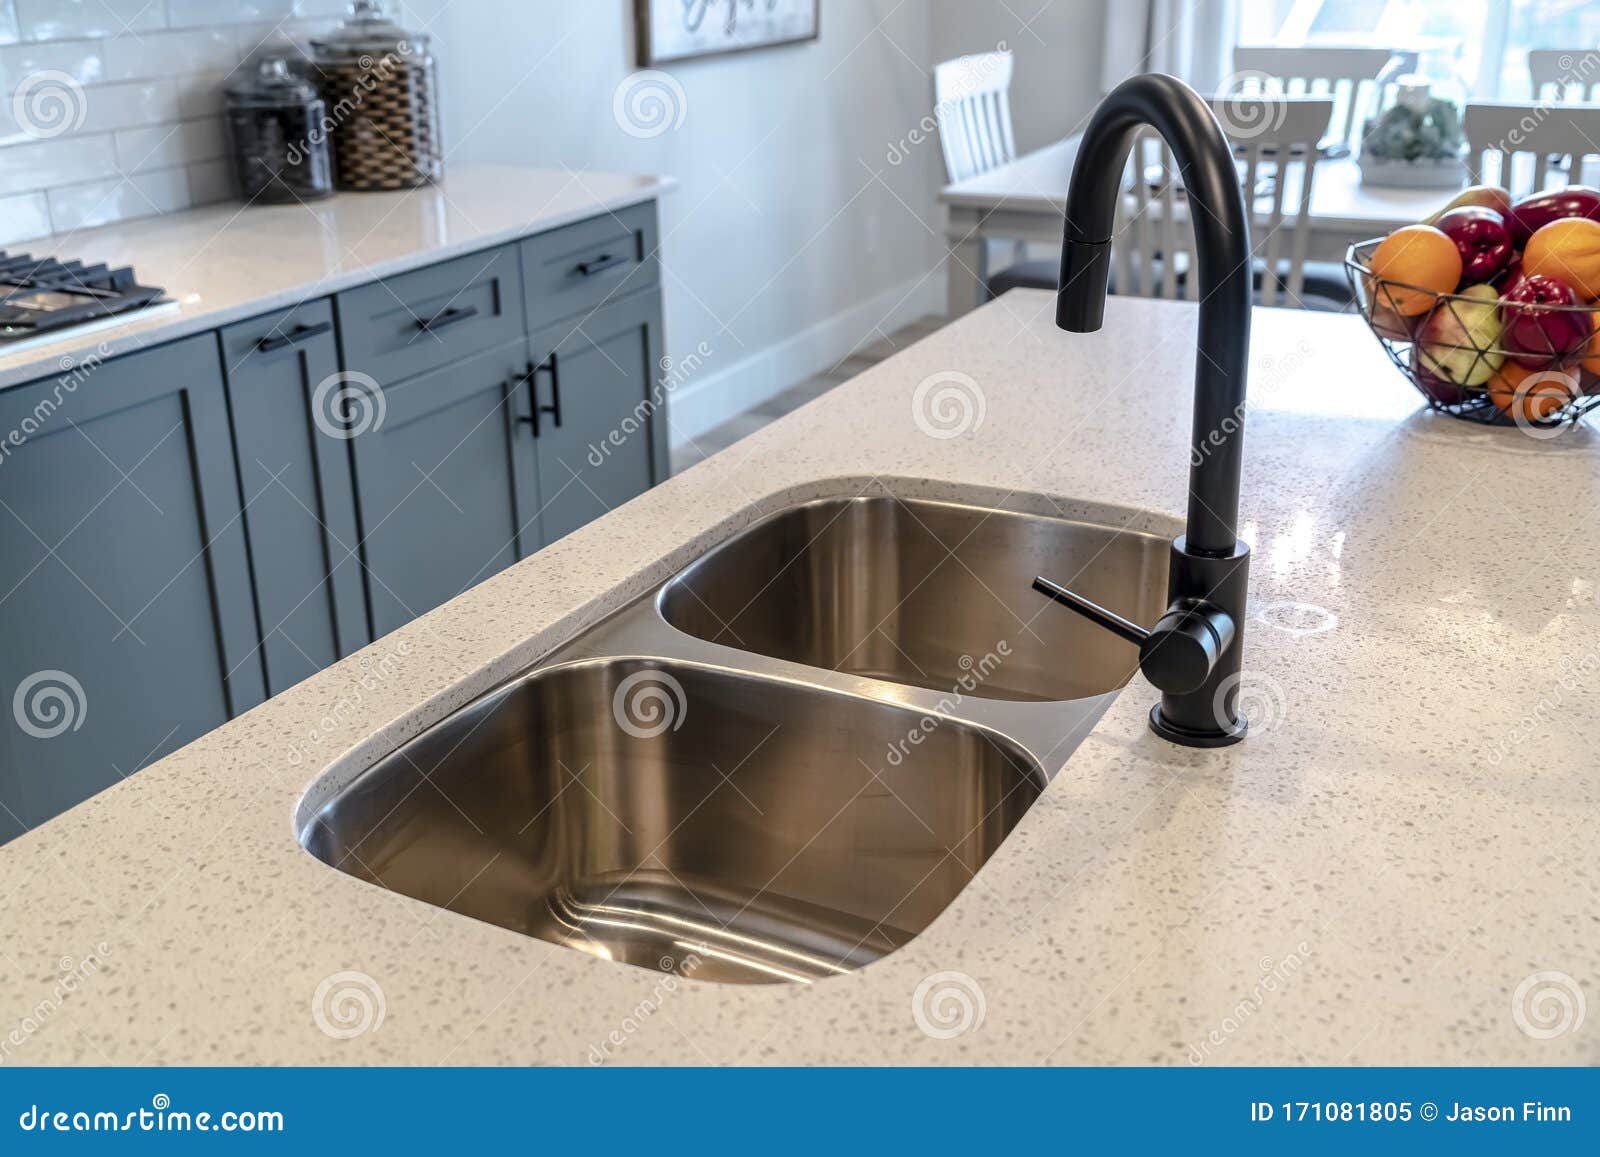 Stainless Steel Undermount Double Basin Kitchen Island Sink with Black ...